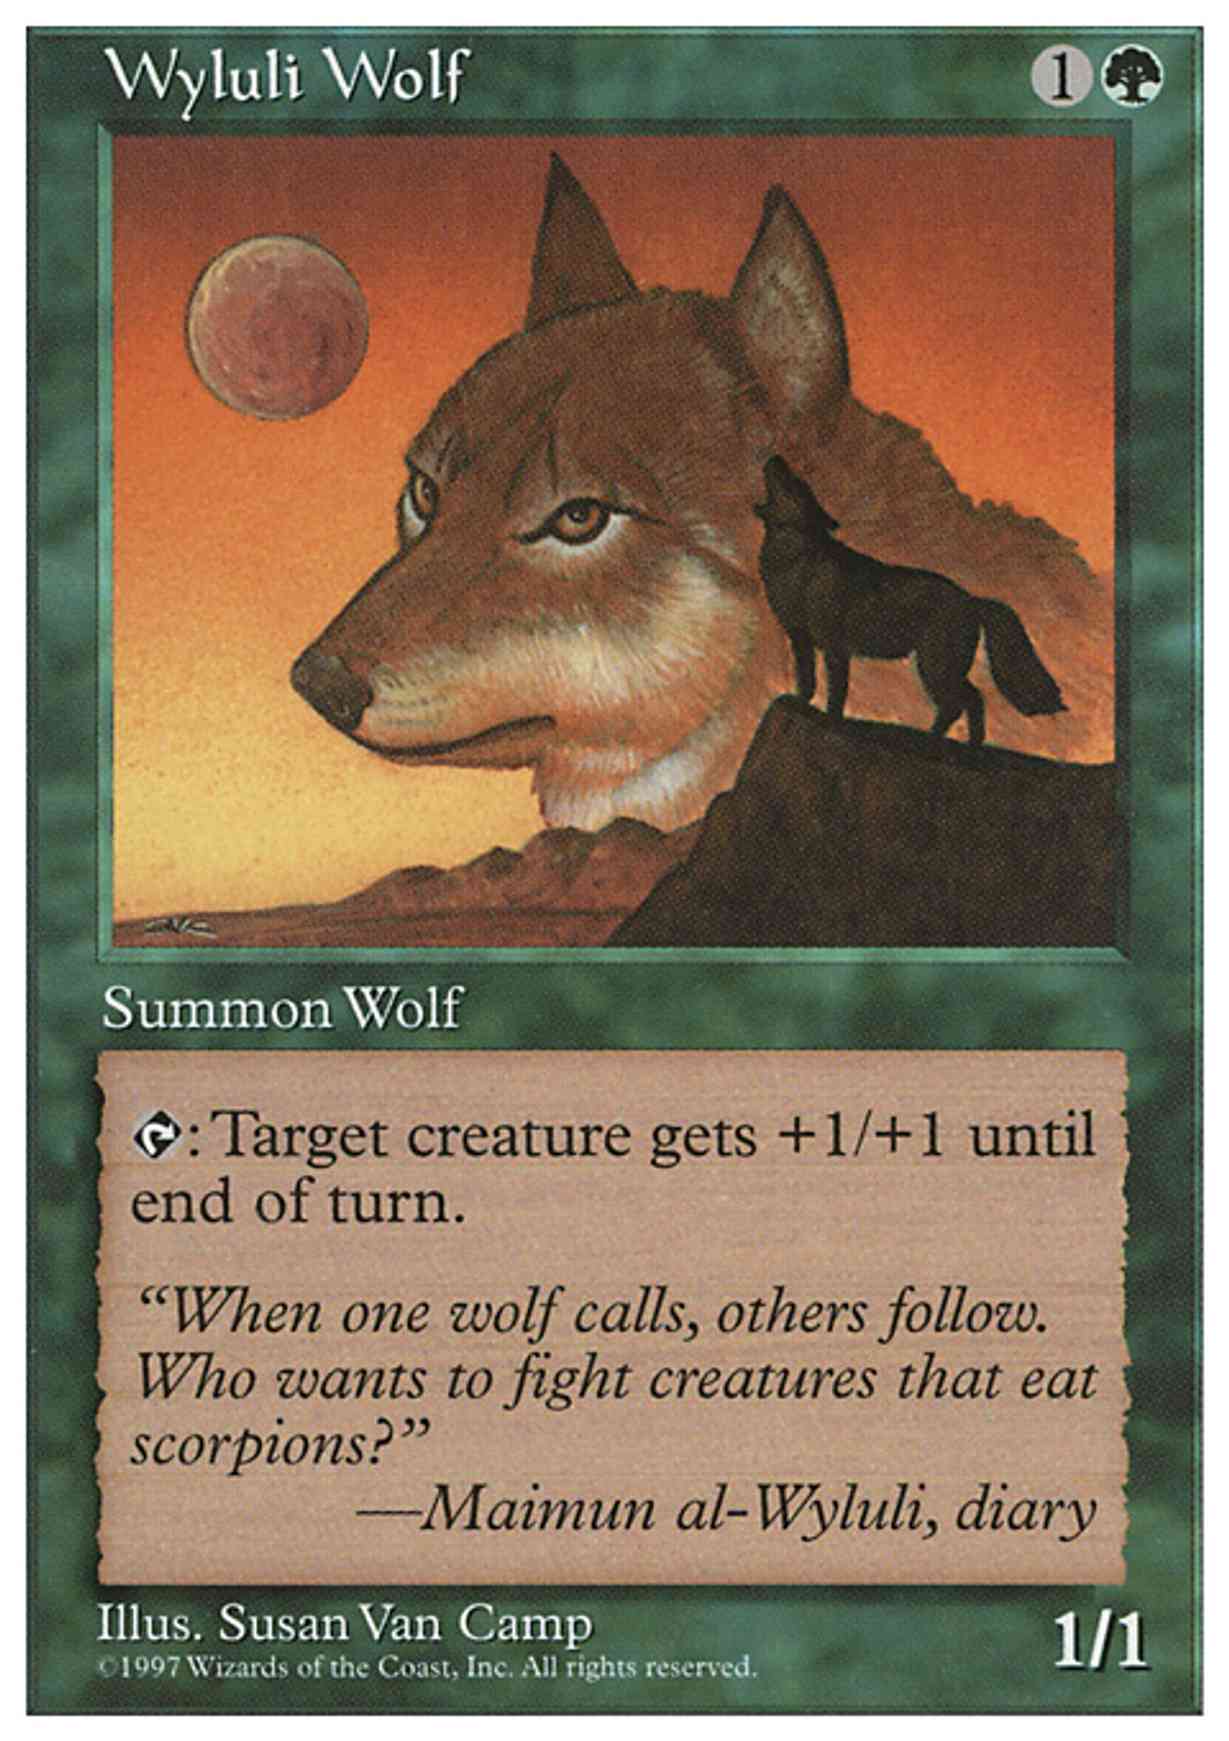 Wyluli Wolf magic card front